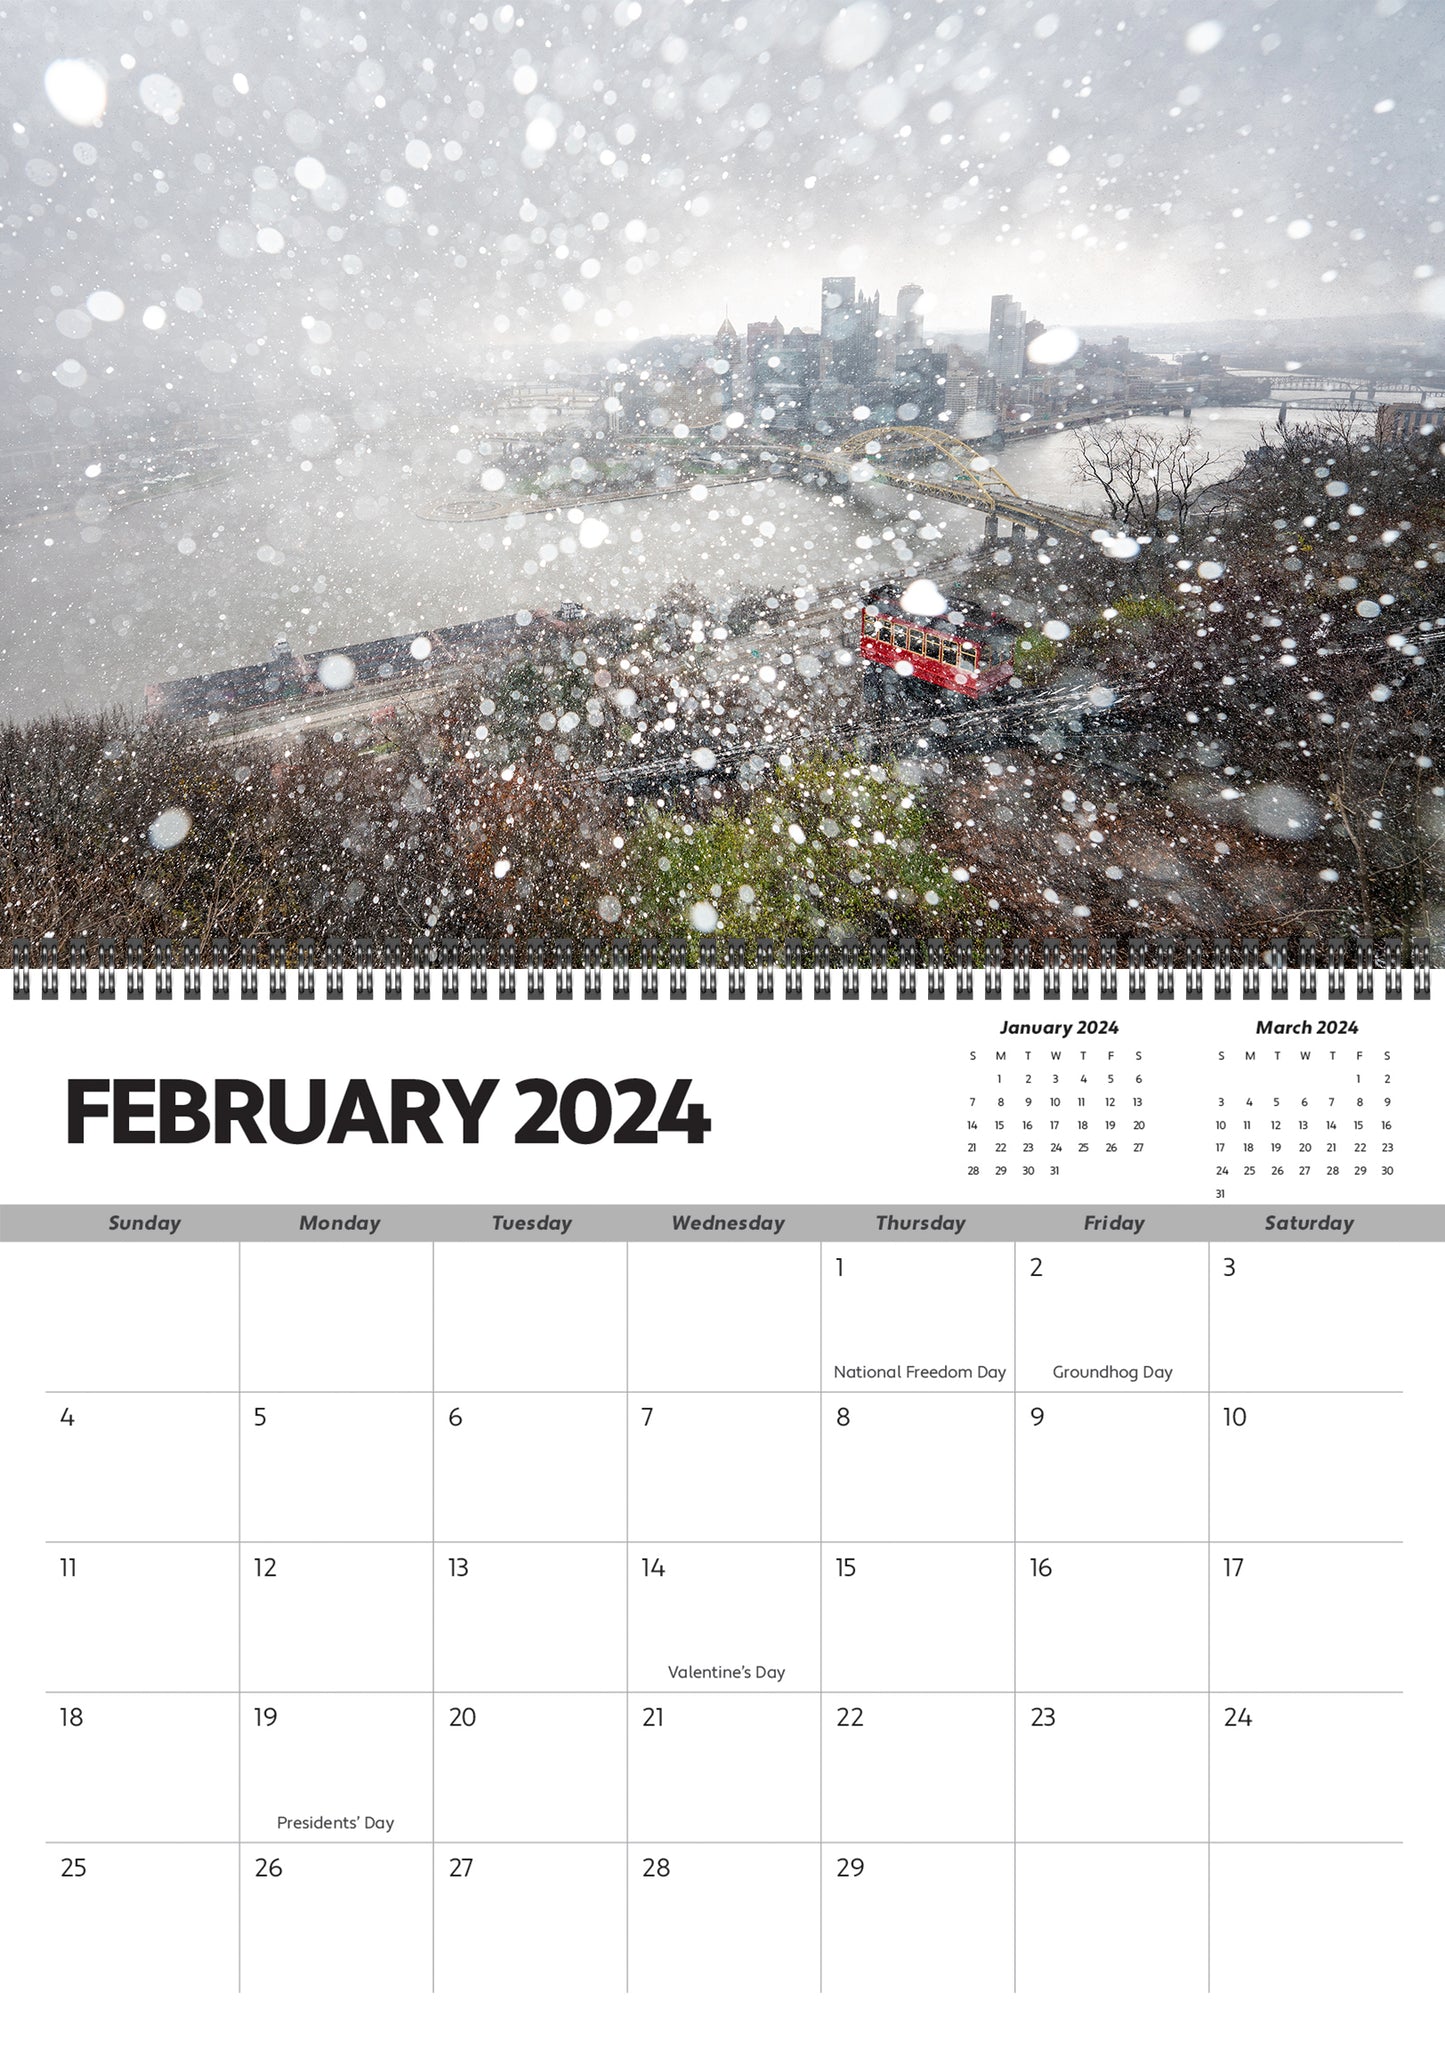 PRE-ORDER 2024 Pittsburgh Wall Calendar